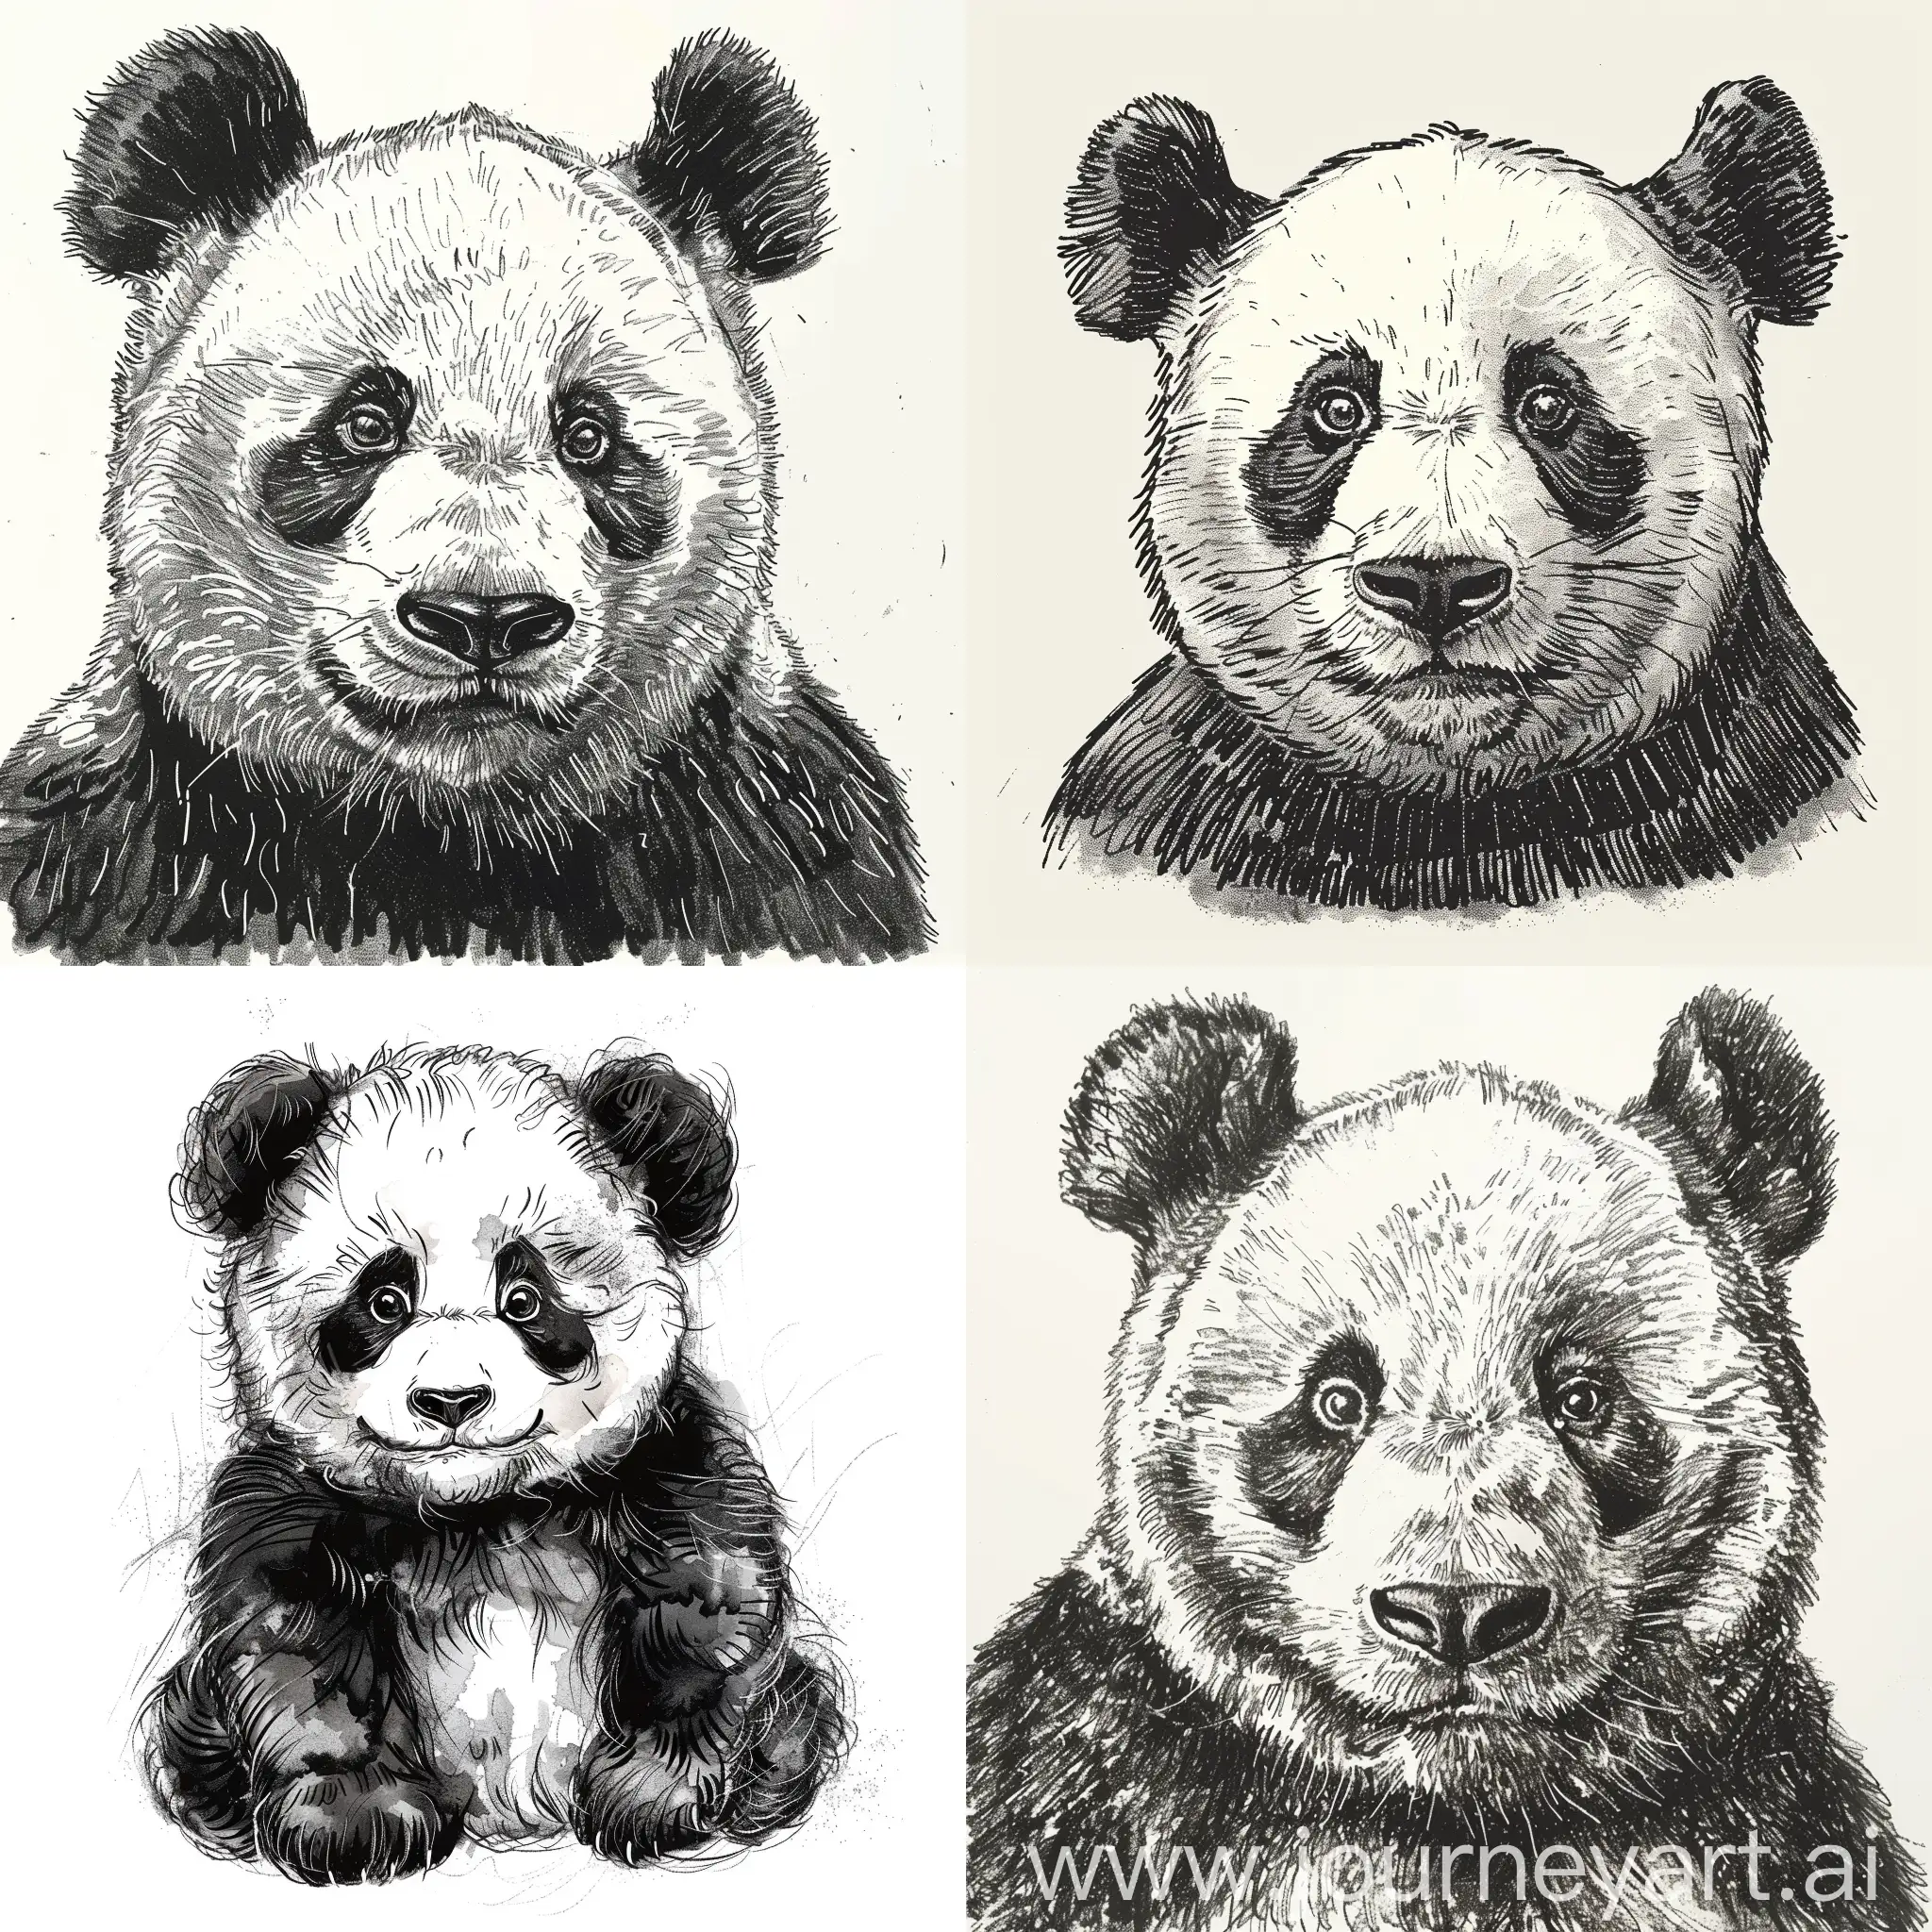 Playful-Panda-Sketch-Adorable-HandDrawn-Artwork-of-a-Panda